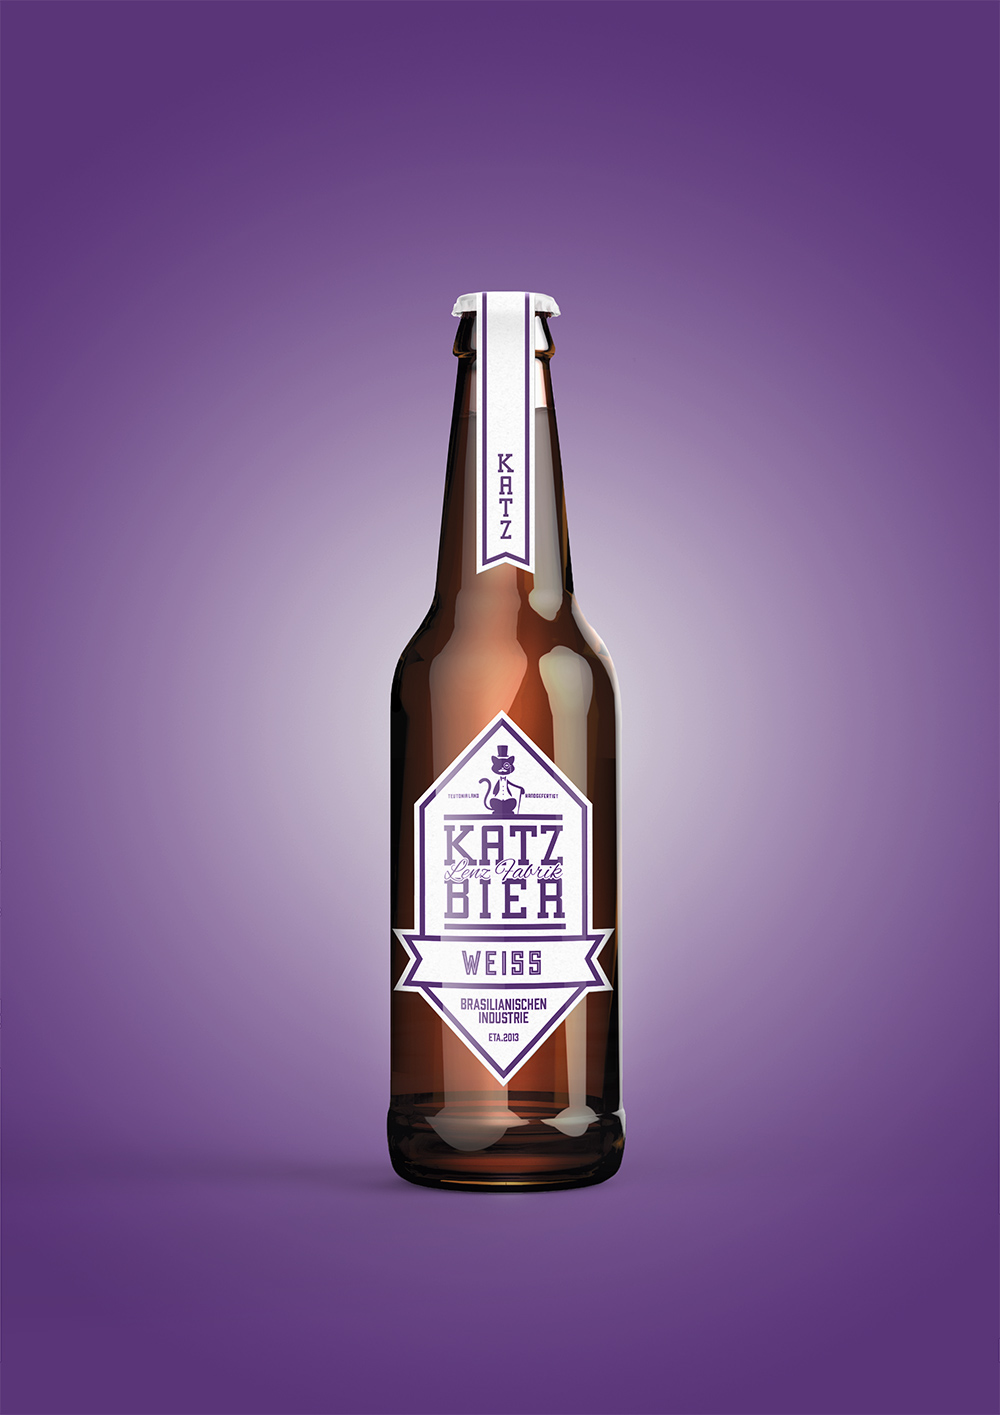 Bier katz design package bottle Cerveja deutsche beer enxaimel Cat fachwerk artesanal handgefertigt stout ale